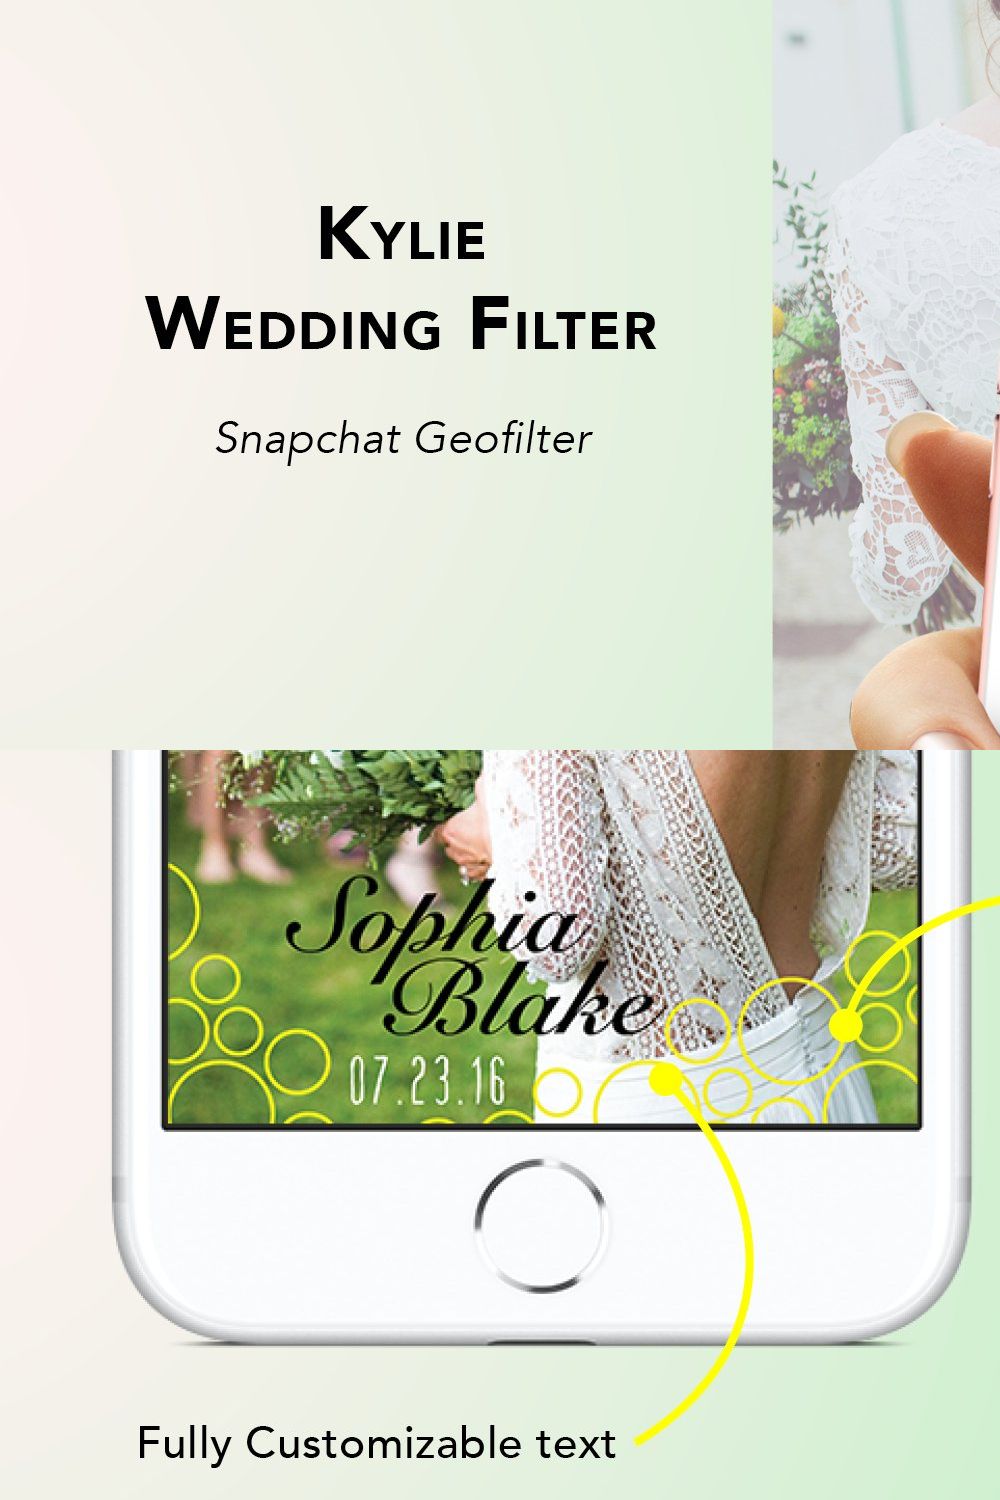 Kylie Wedding Geofilter pinterest preview image.